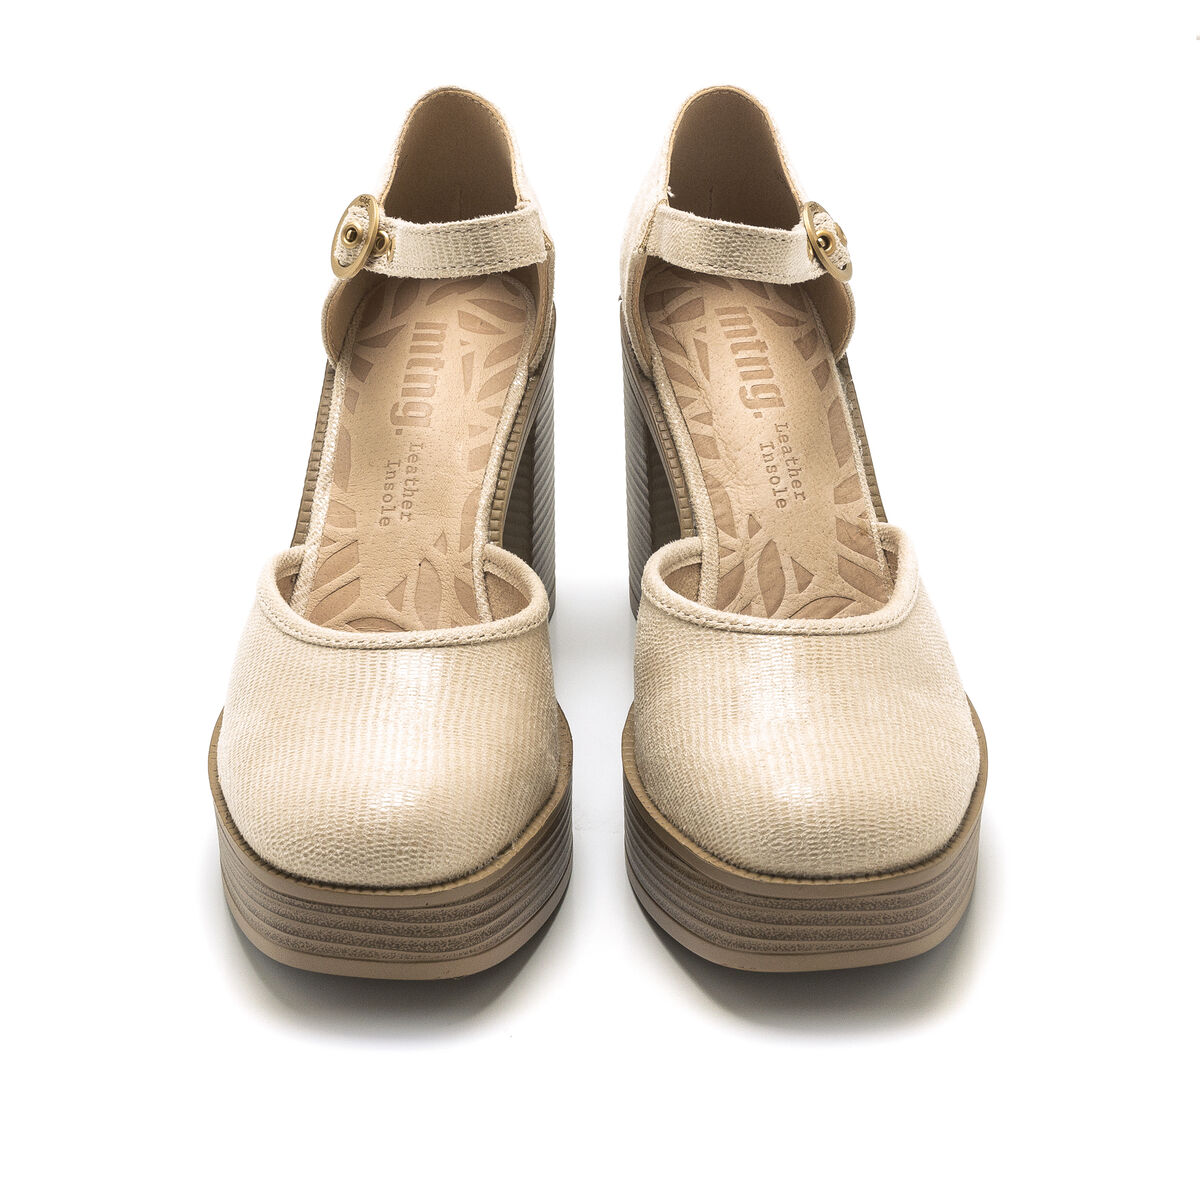 Zapatos de tacon de Mujer modelo NEW 67 de MTNG image number 2